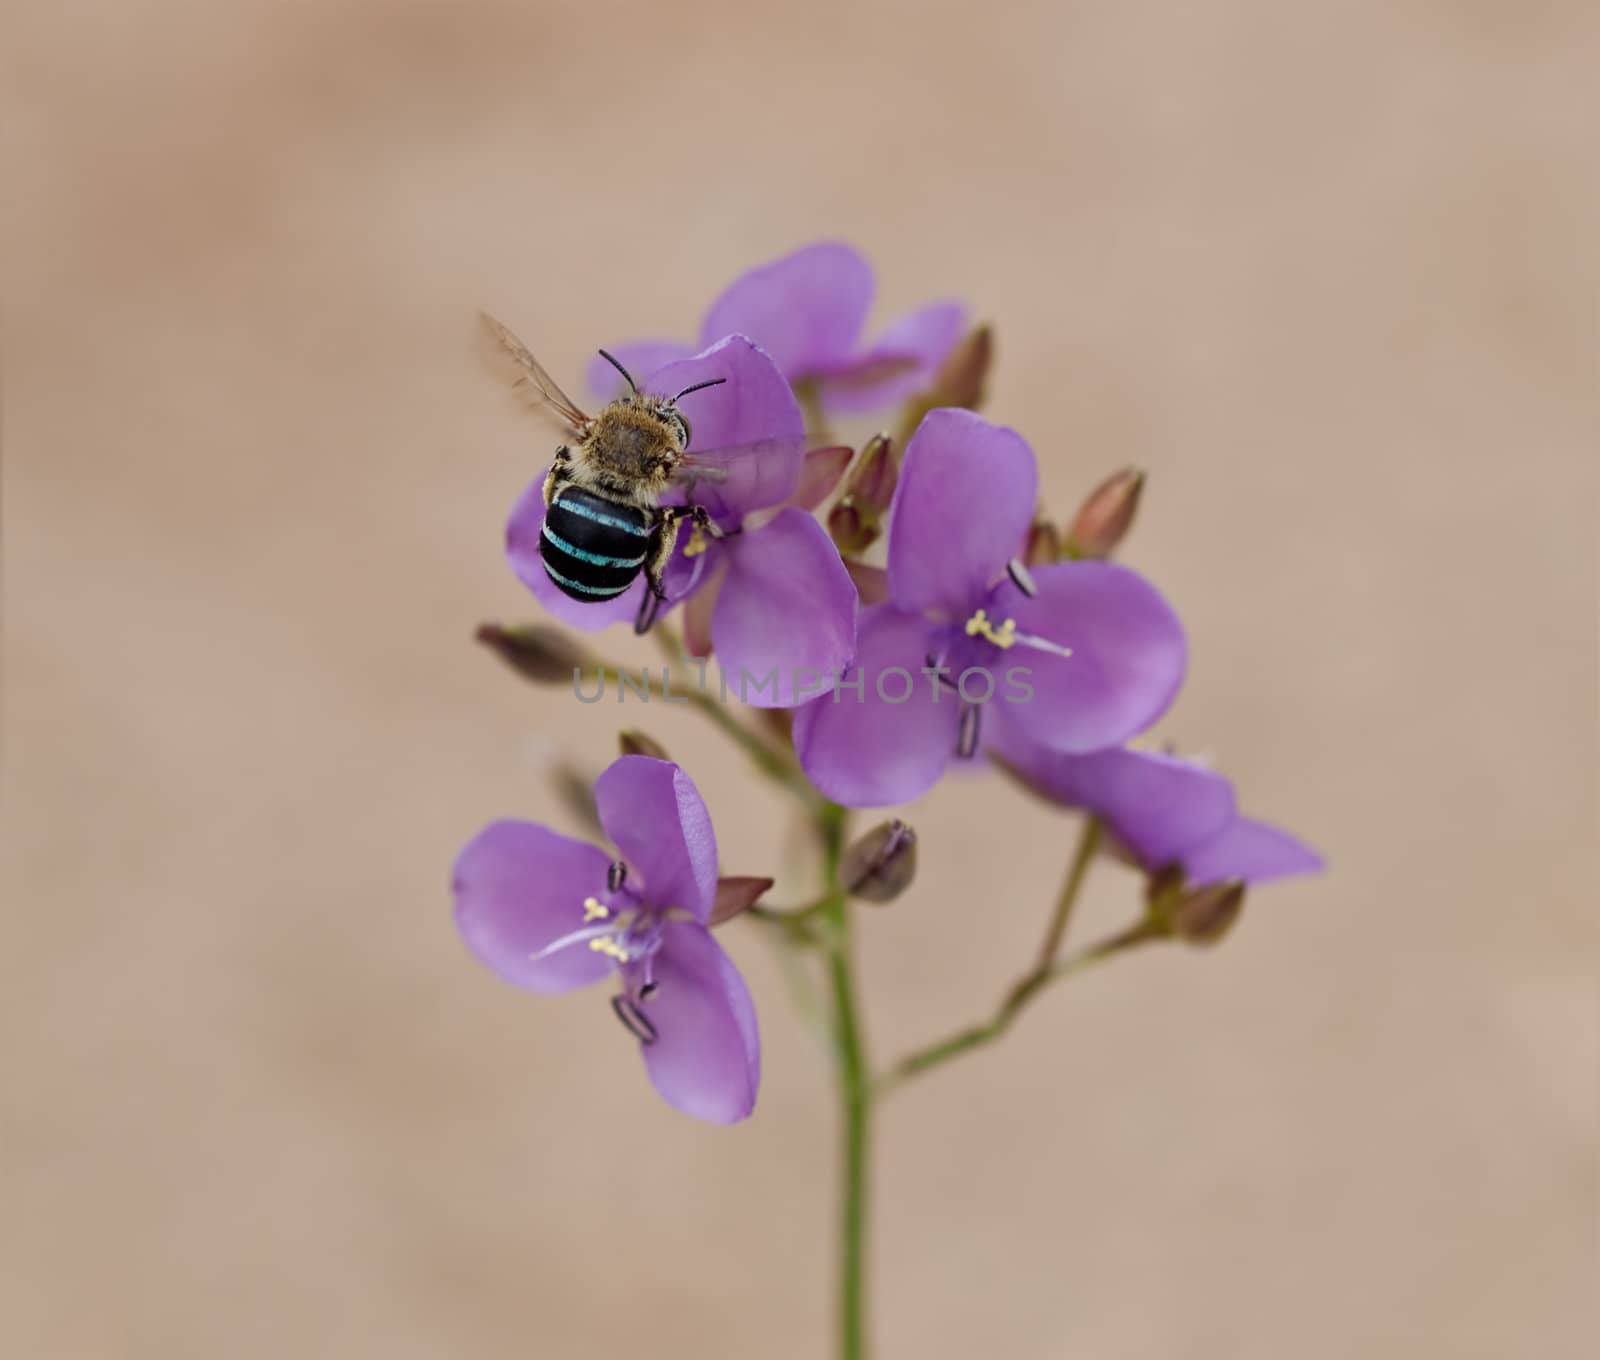 Australia native bee on Australian wildflower Murdannia graminea by sherj